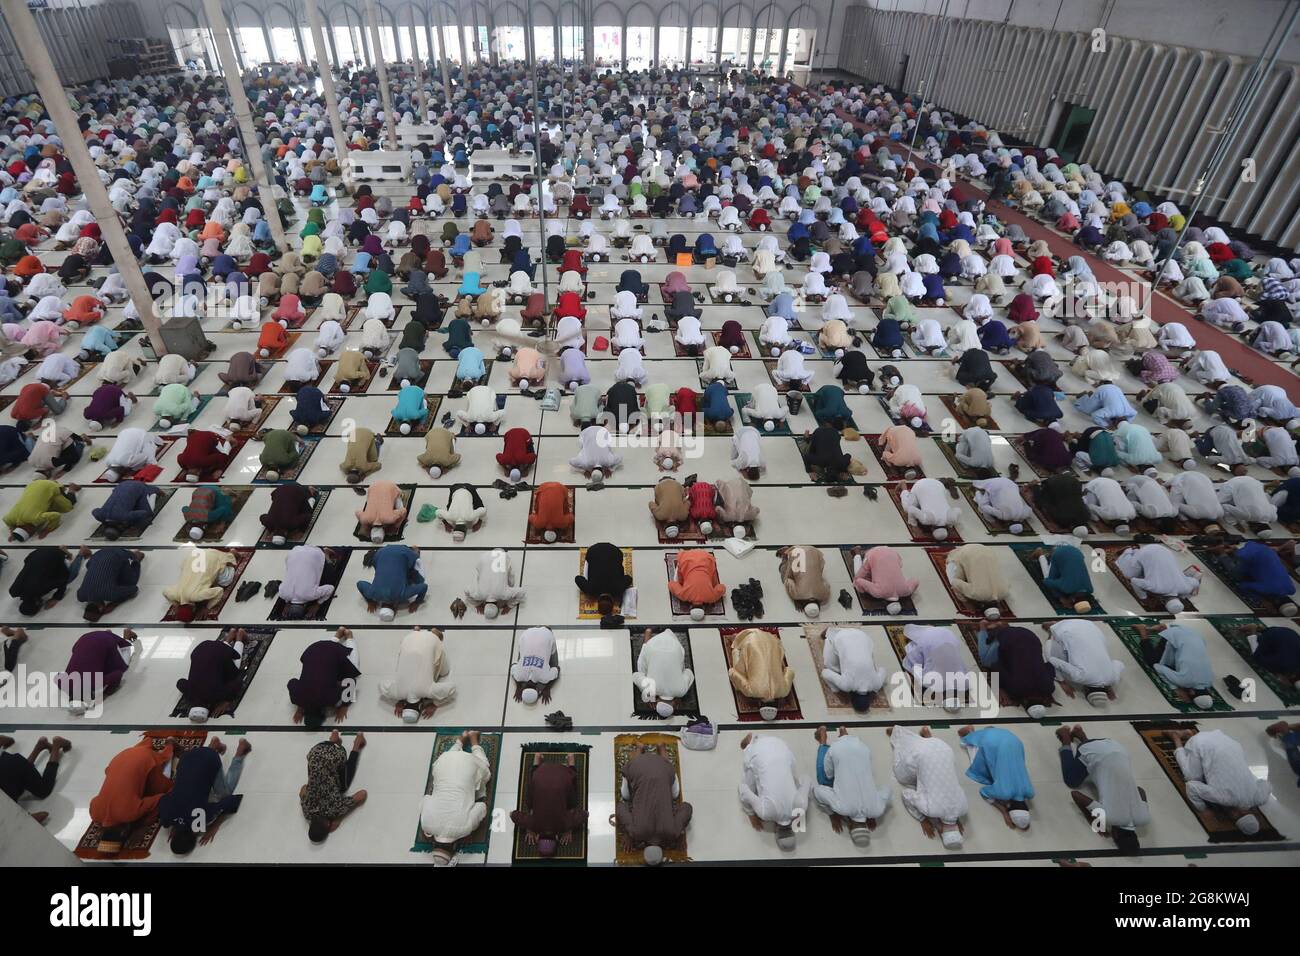 Dhaka. 21st July, 2021. People pray during the Eid al-Adha festival in Dhaka, Bangladesh, July 21, 2021. Credit: Xinhua/Alamy Live News Stock Photo